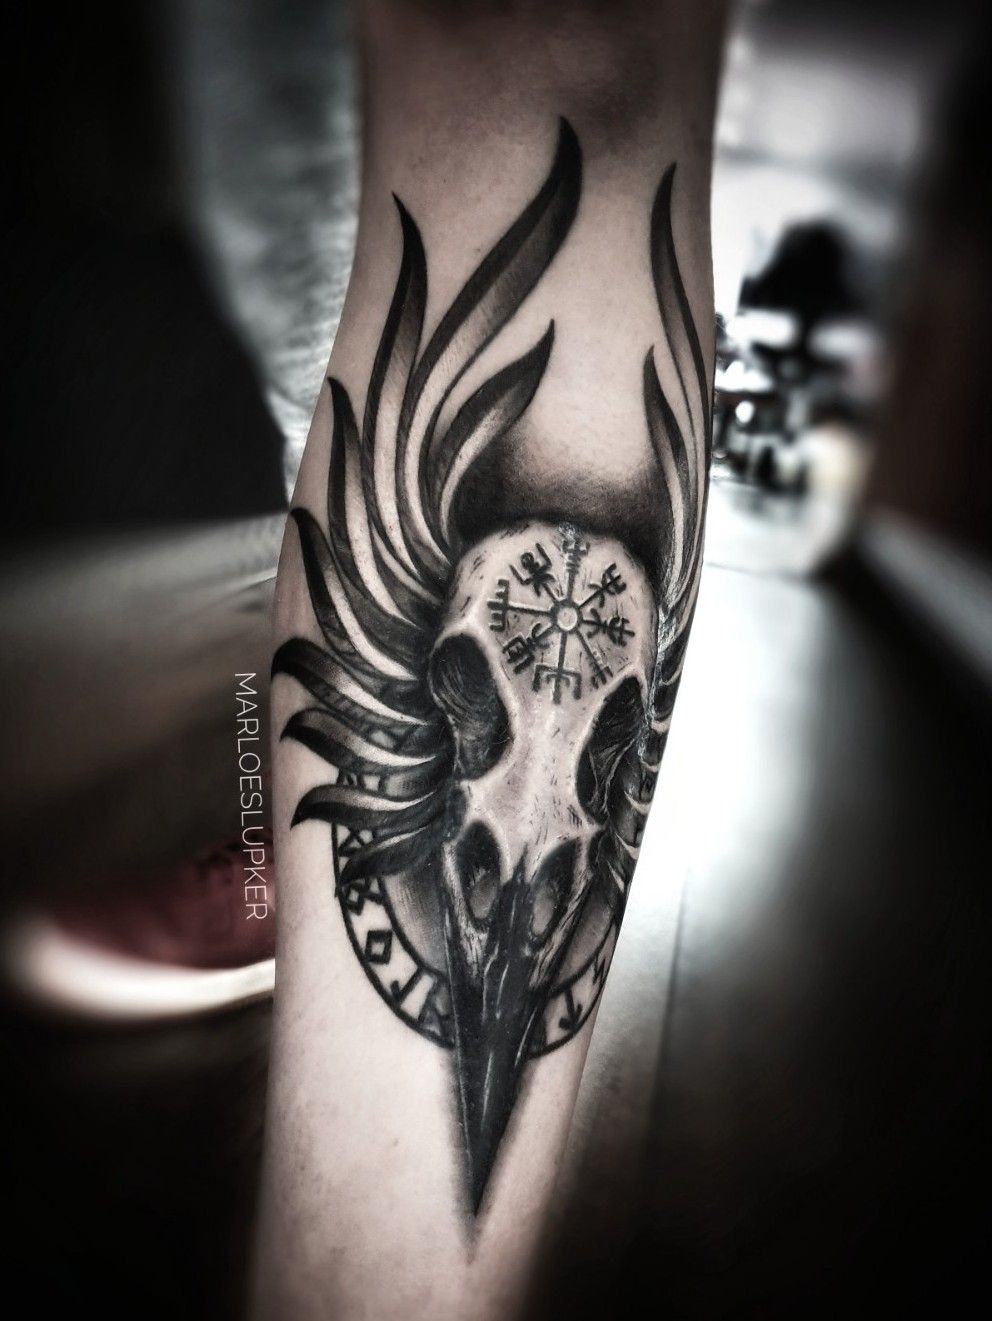 Neo trad Odin  Metamorphosis tattoo  piercing studio  Facebook